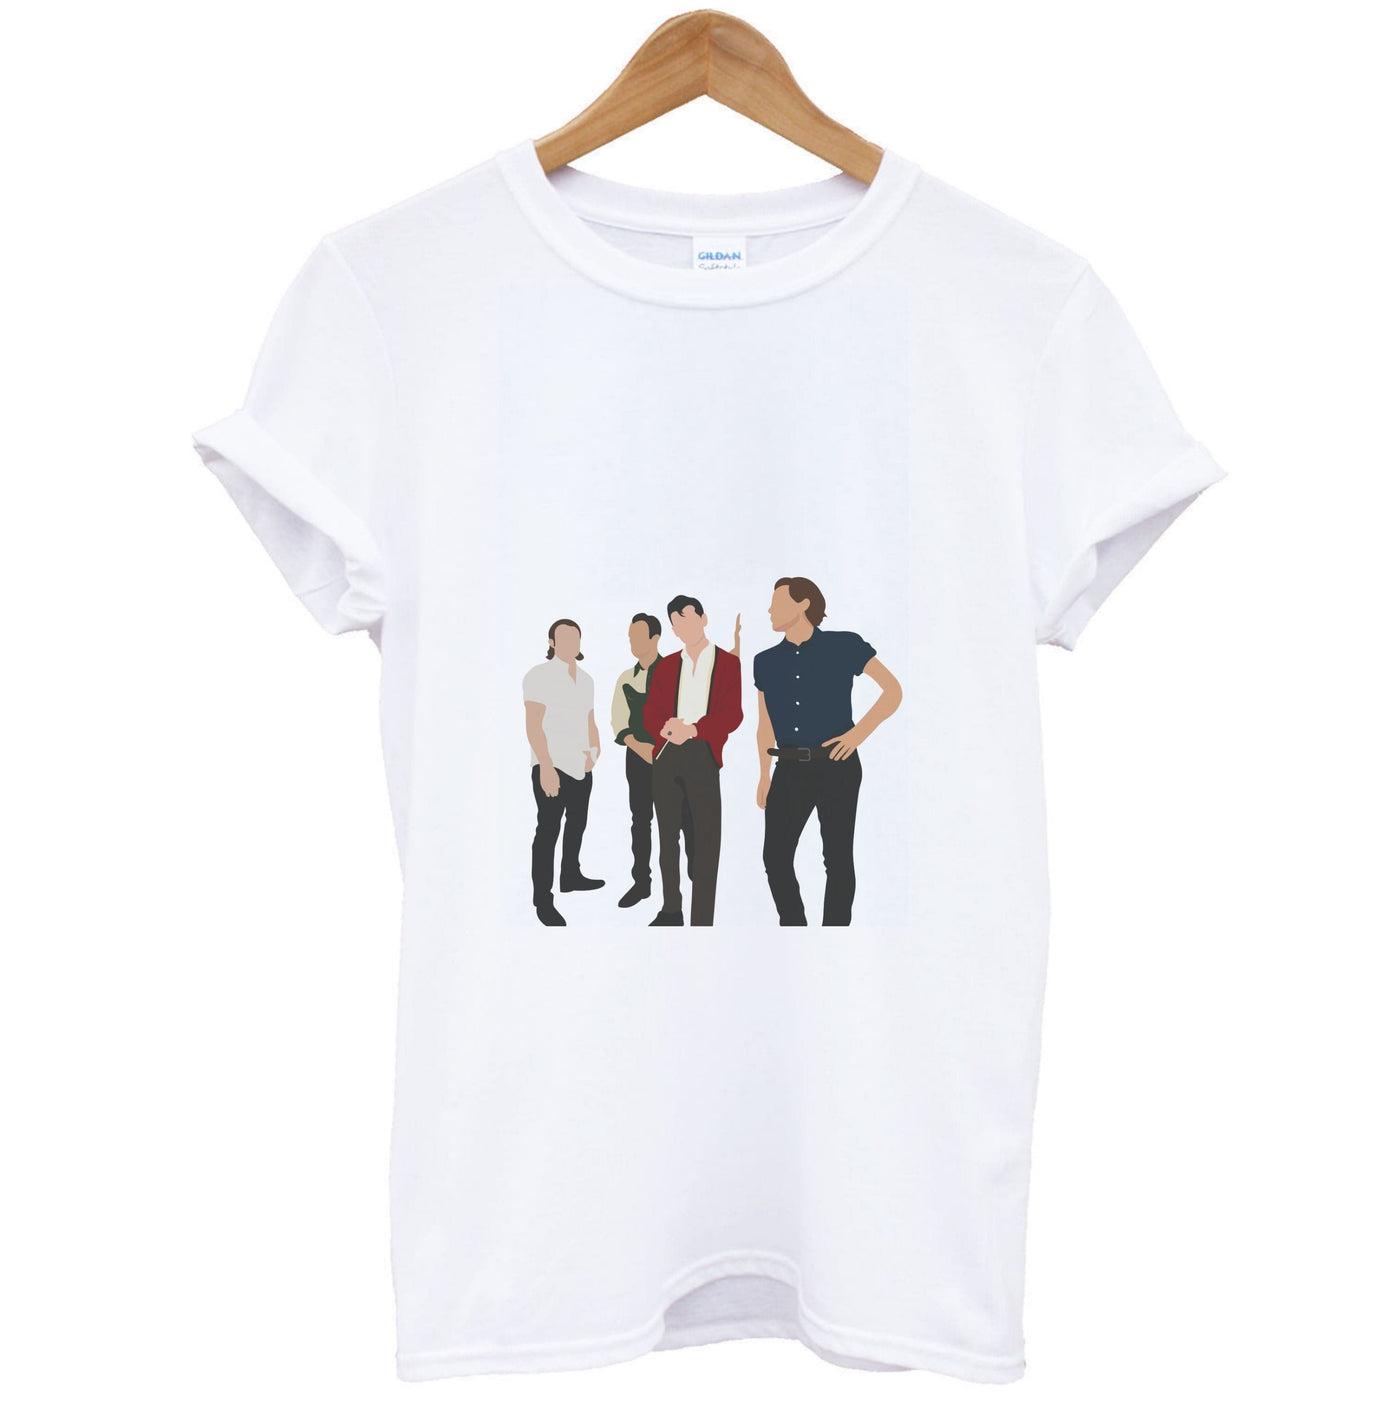 The Crew - Arctic Monkeys T-Shirt